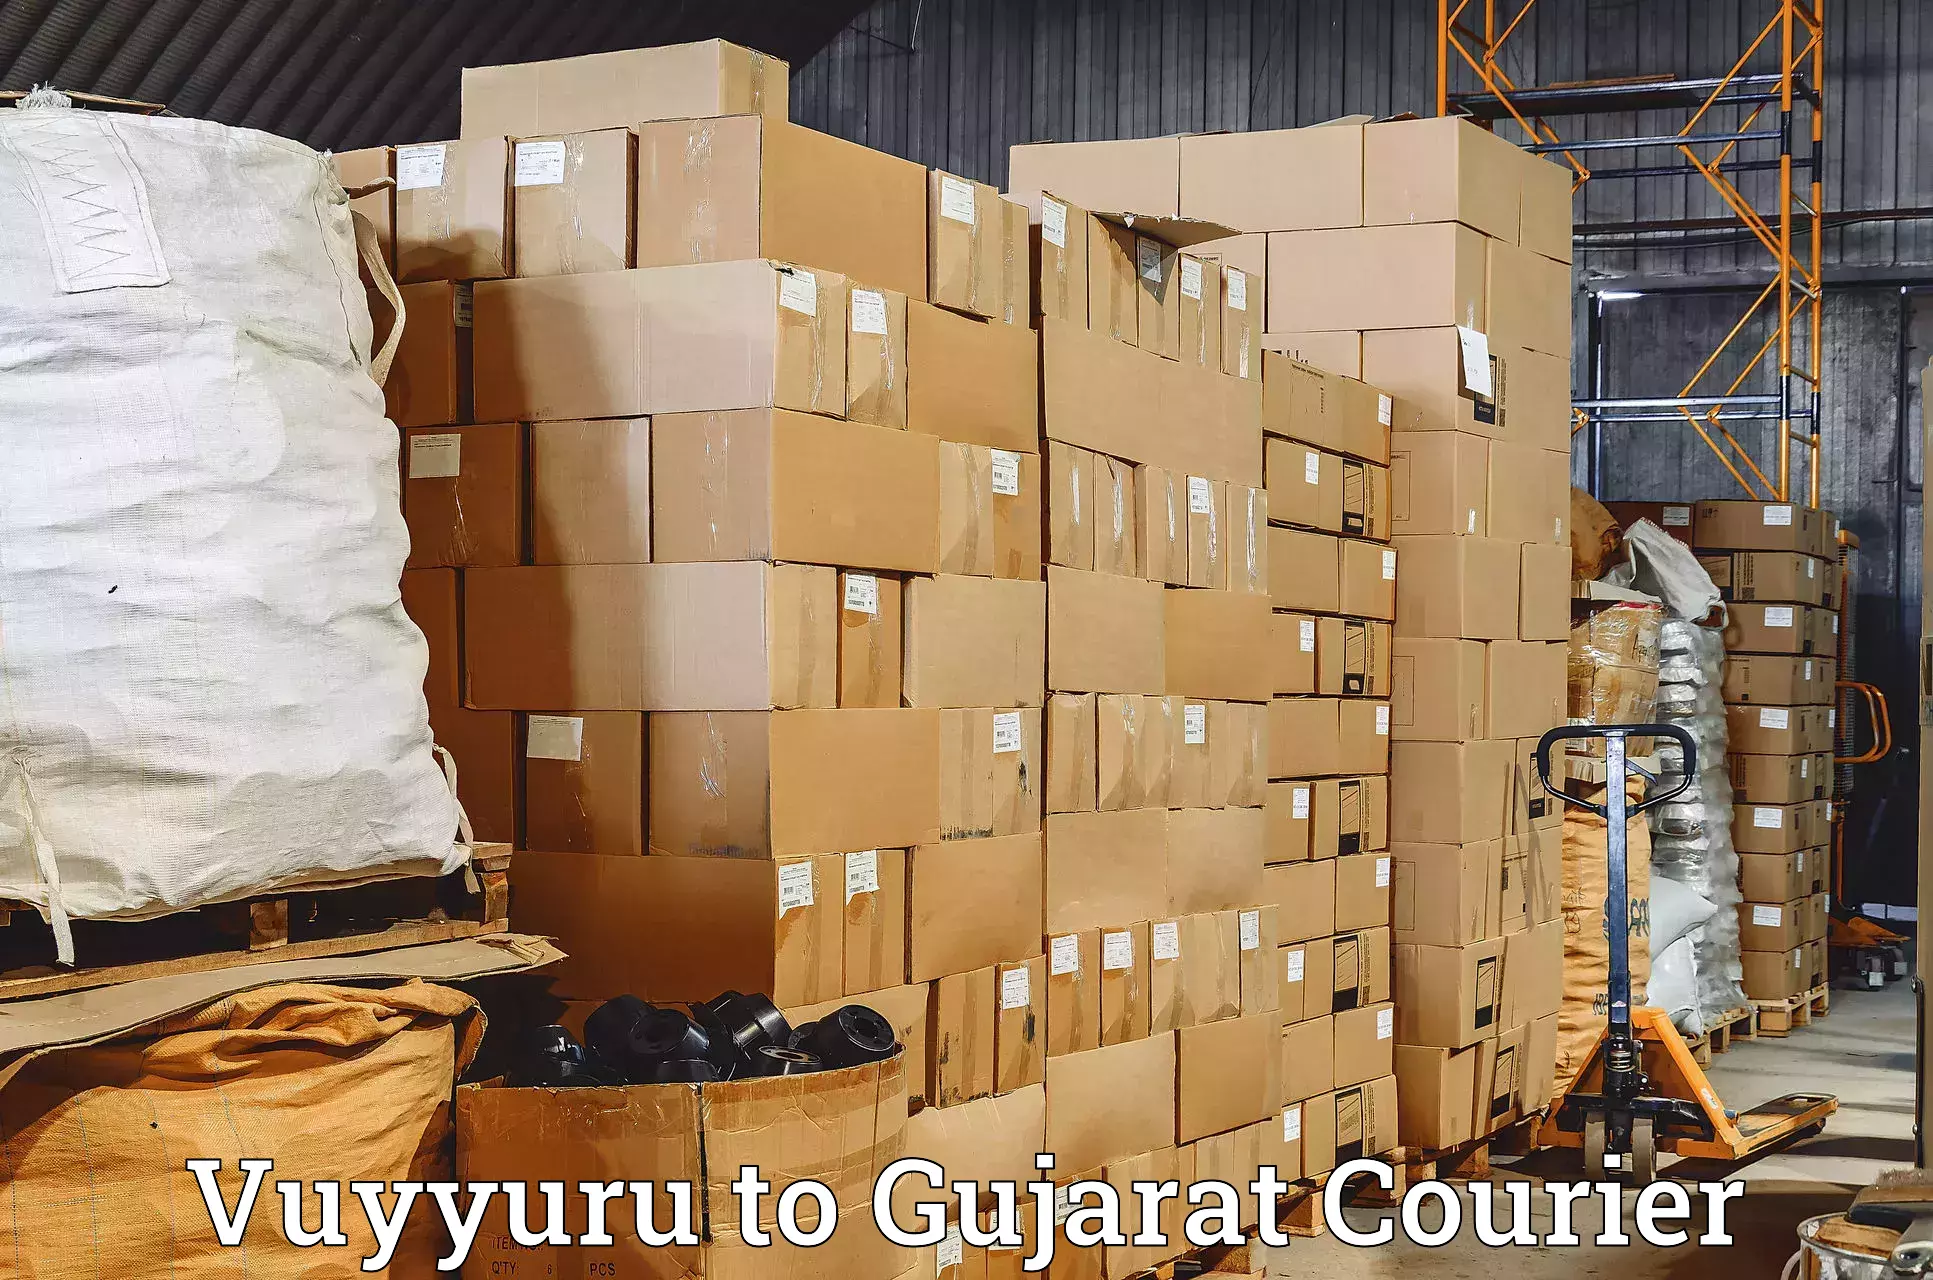 Seamless shipping experience Vuyyuru to Matar